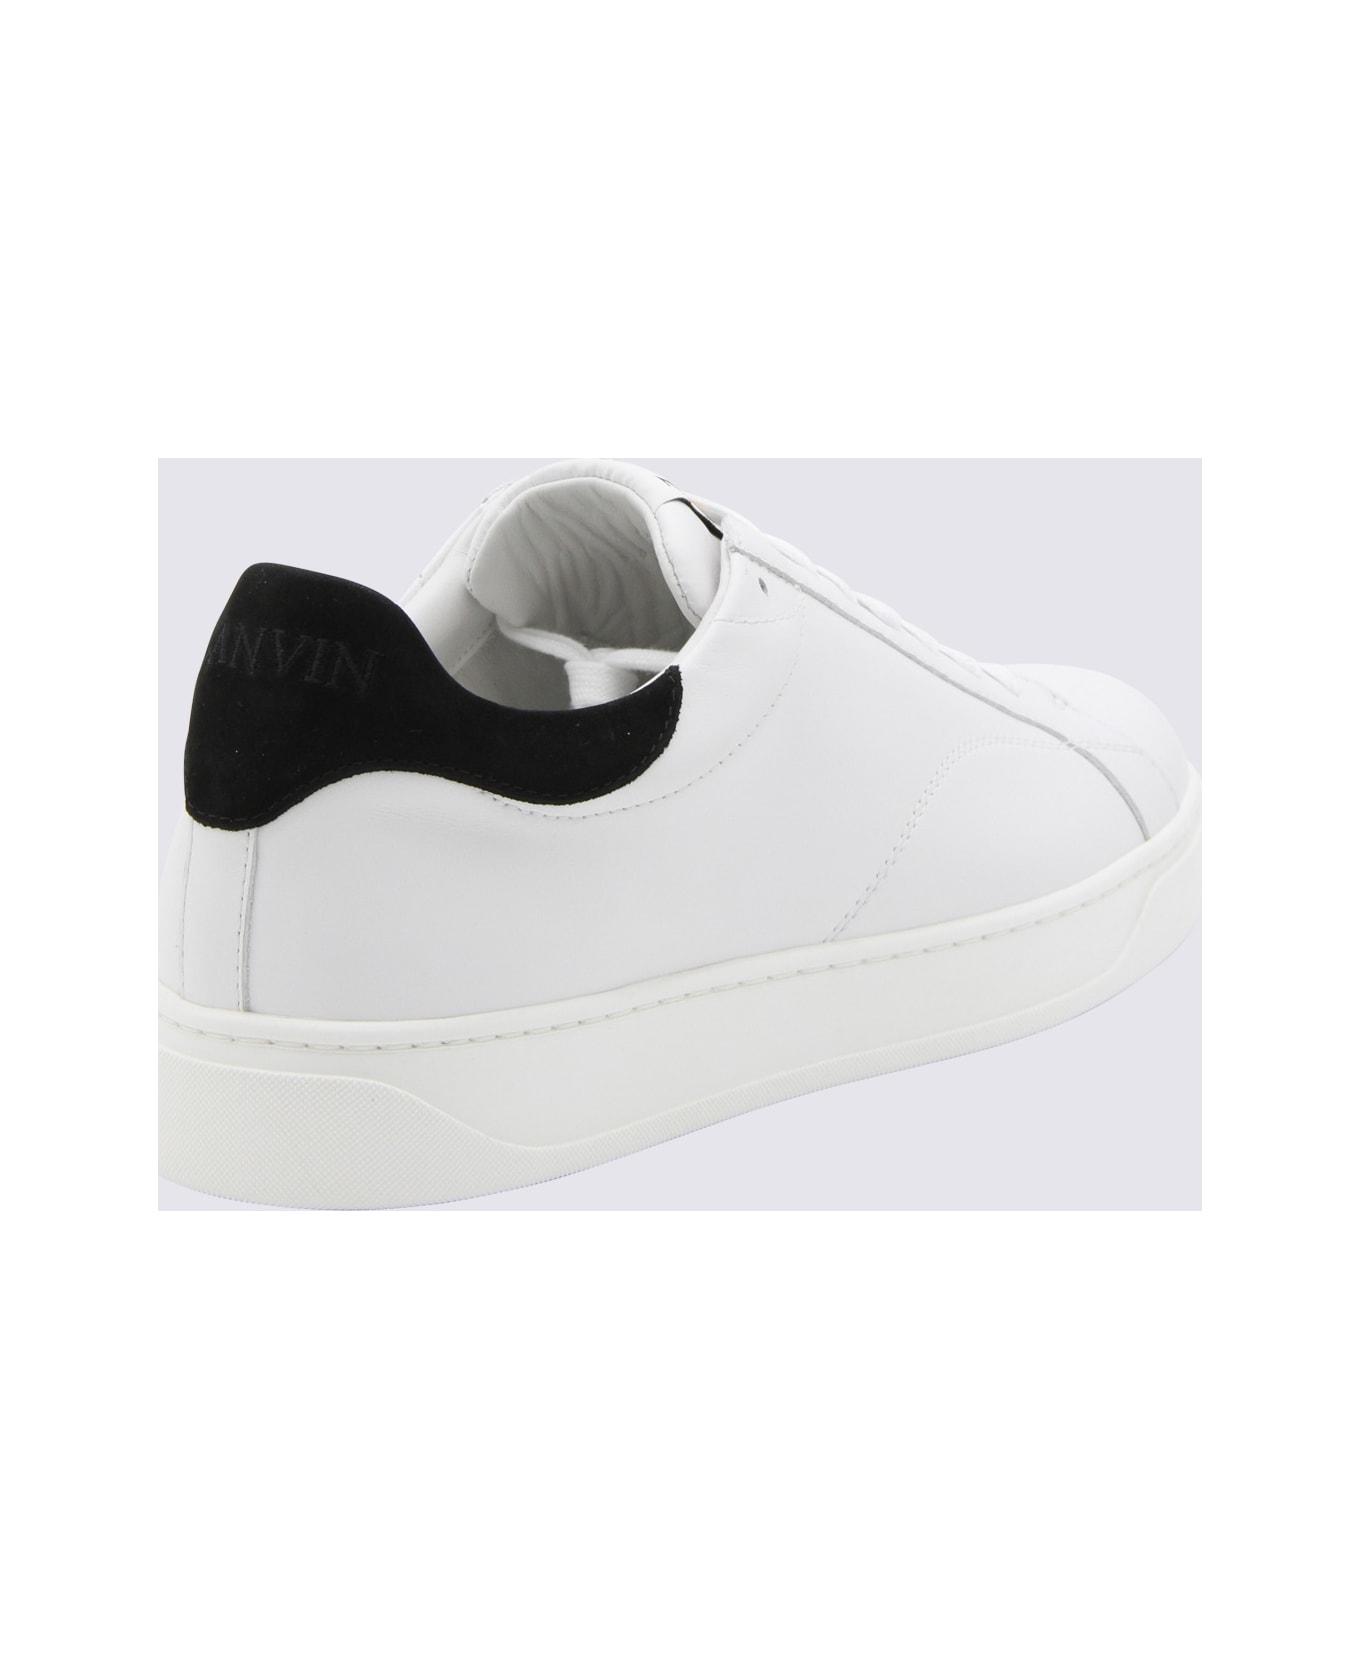 Lanvin White Leather Dbbo Sneakers - White